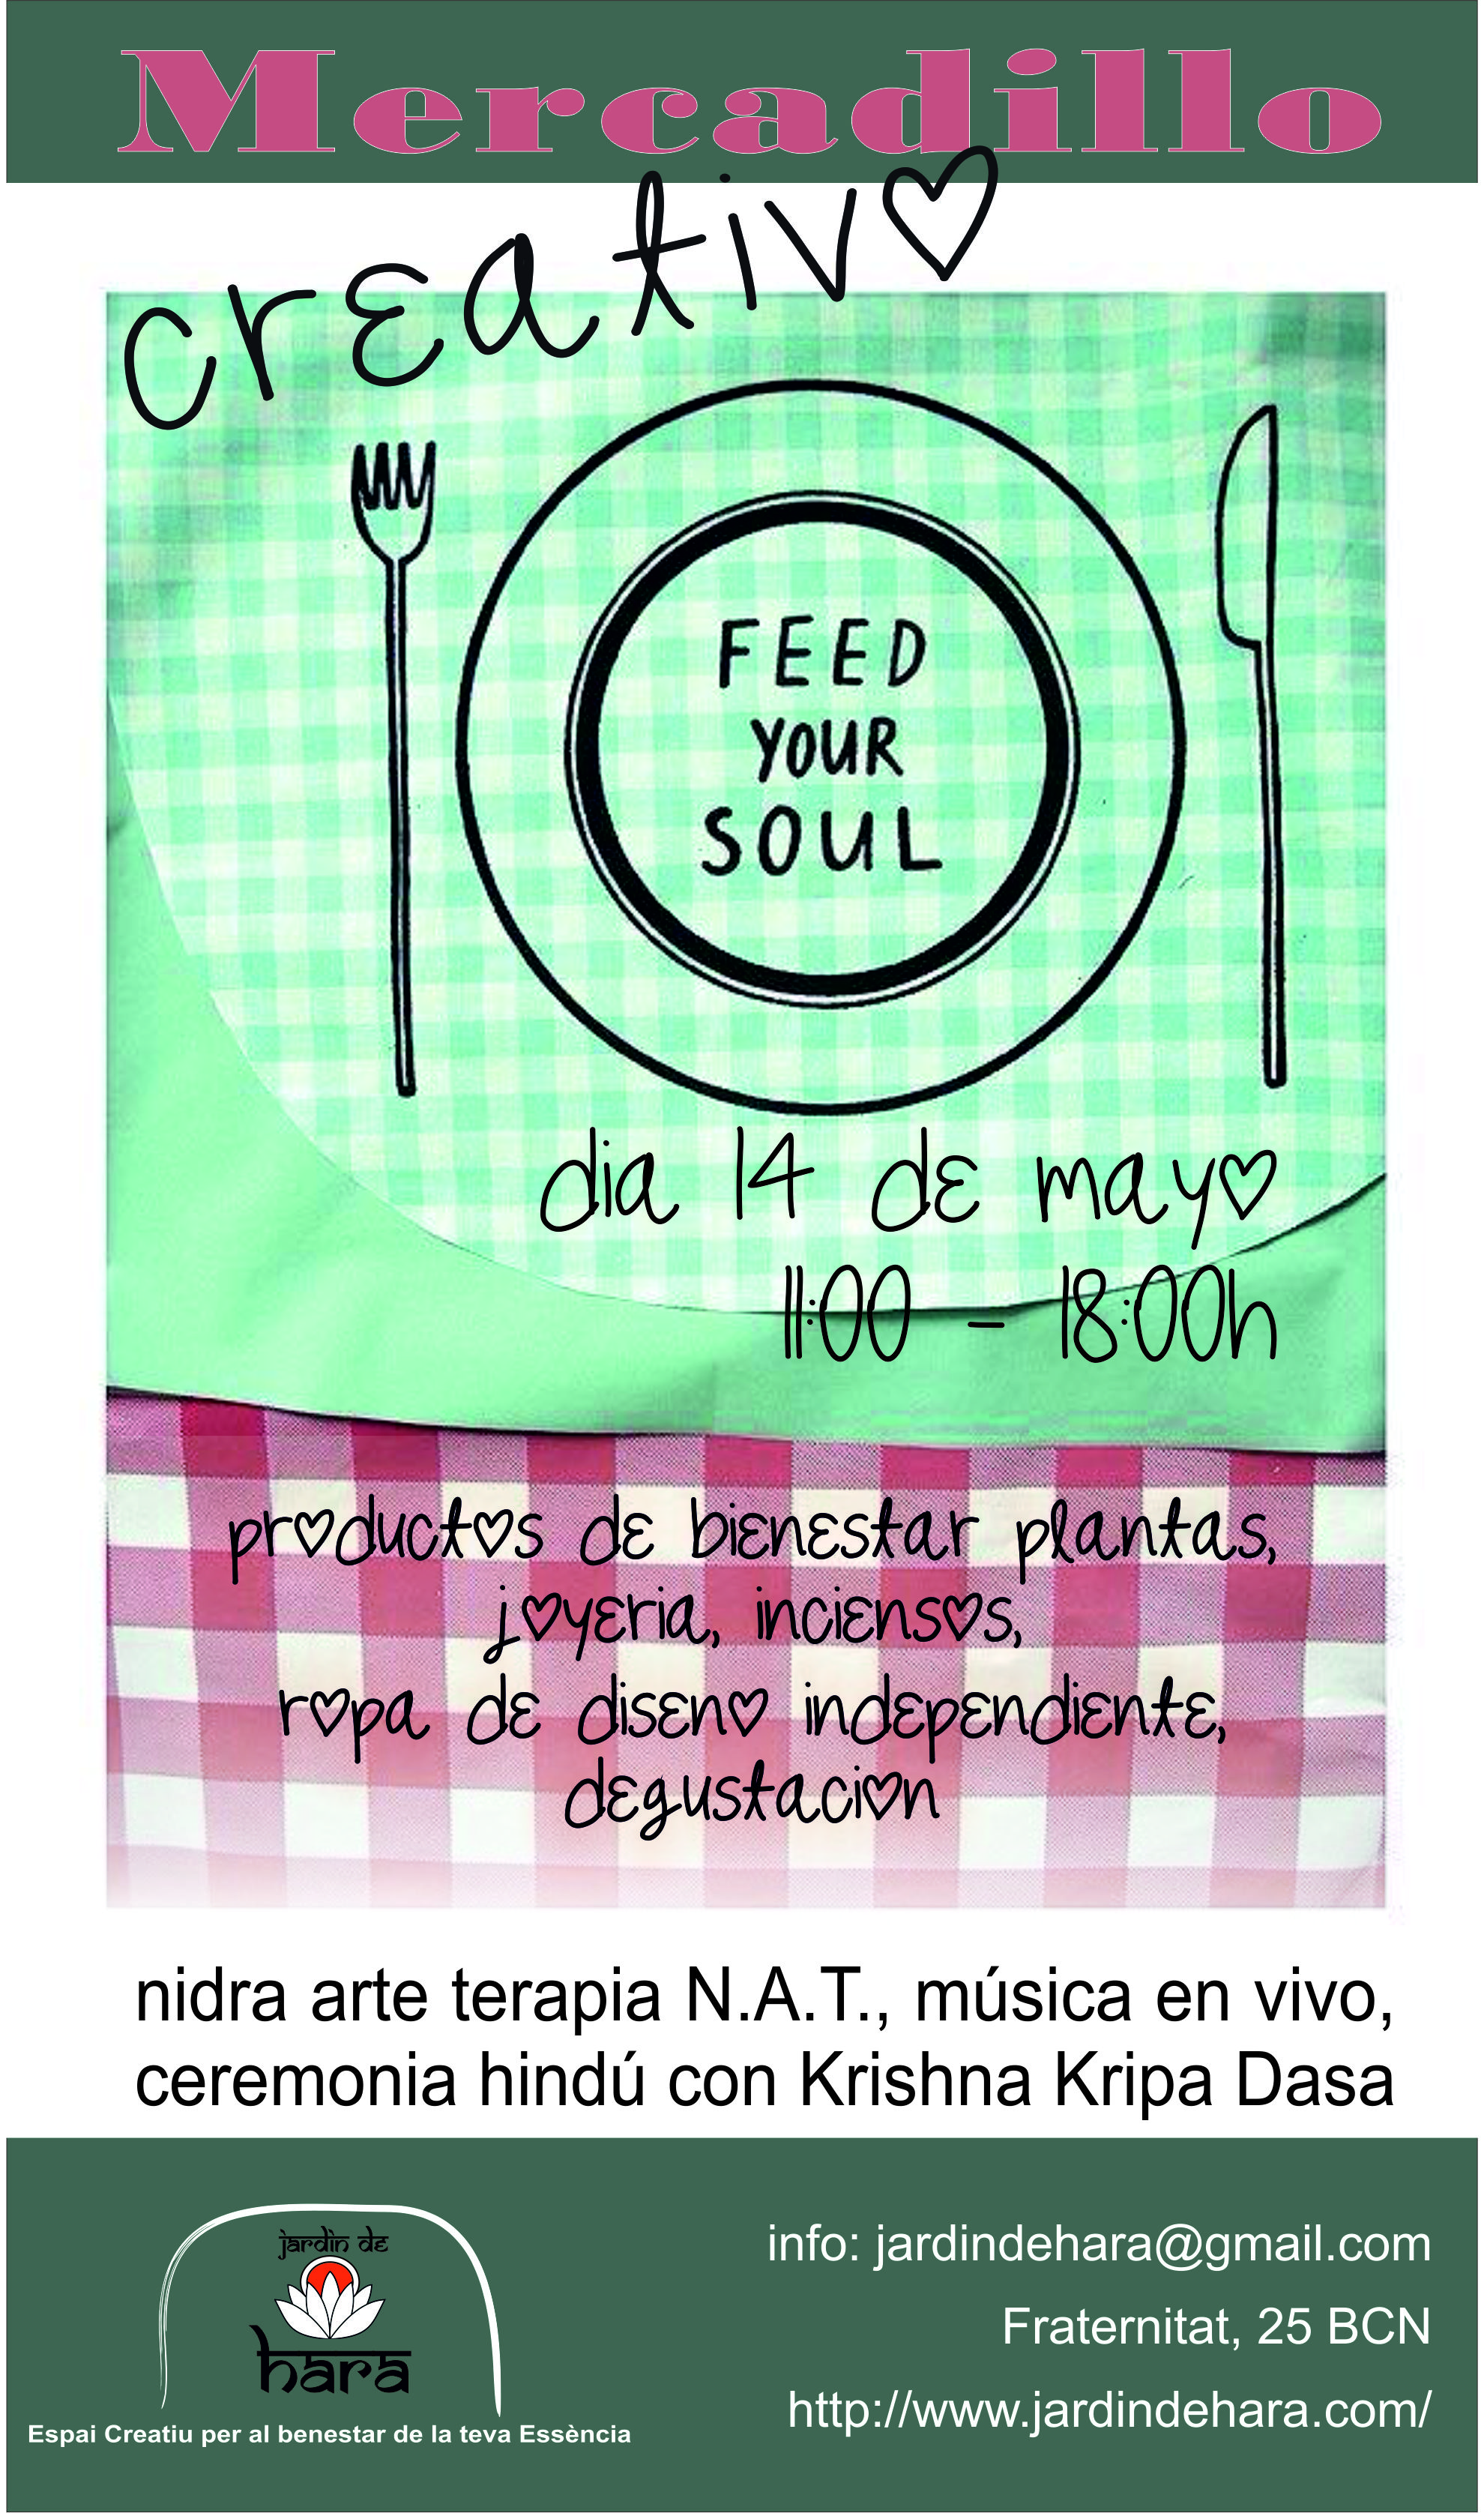 mercadillo_14_mayo feed your soul